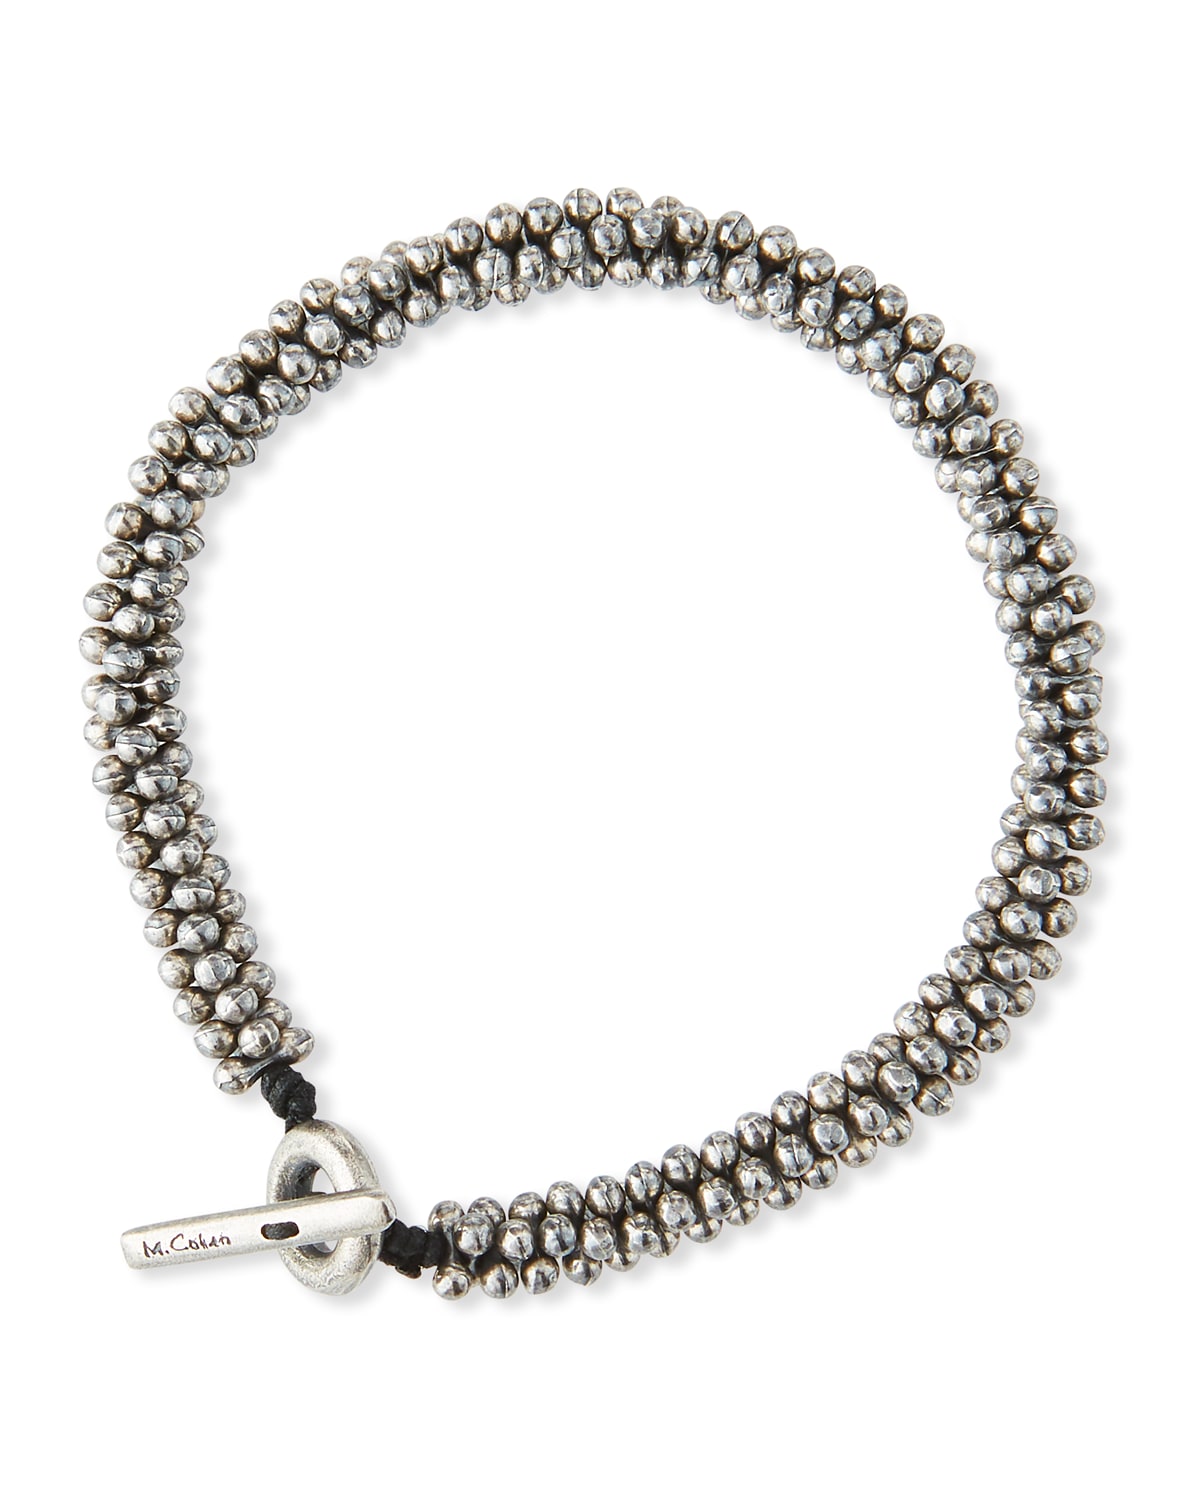 M. Cohen Men's Mini Sterling Silver Jacks Bead Bracelet